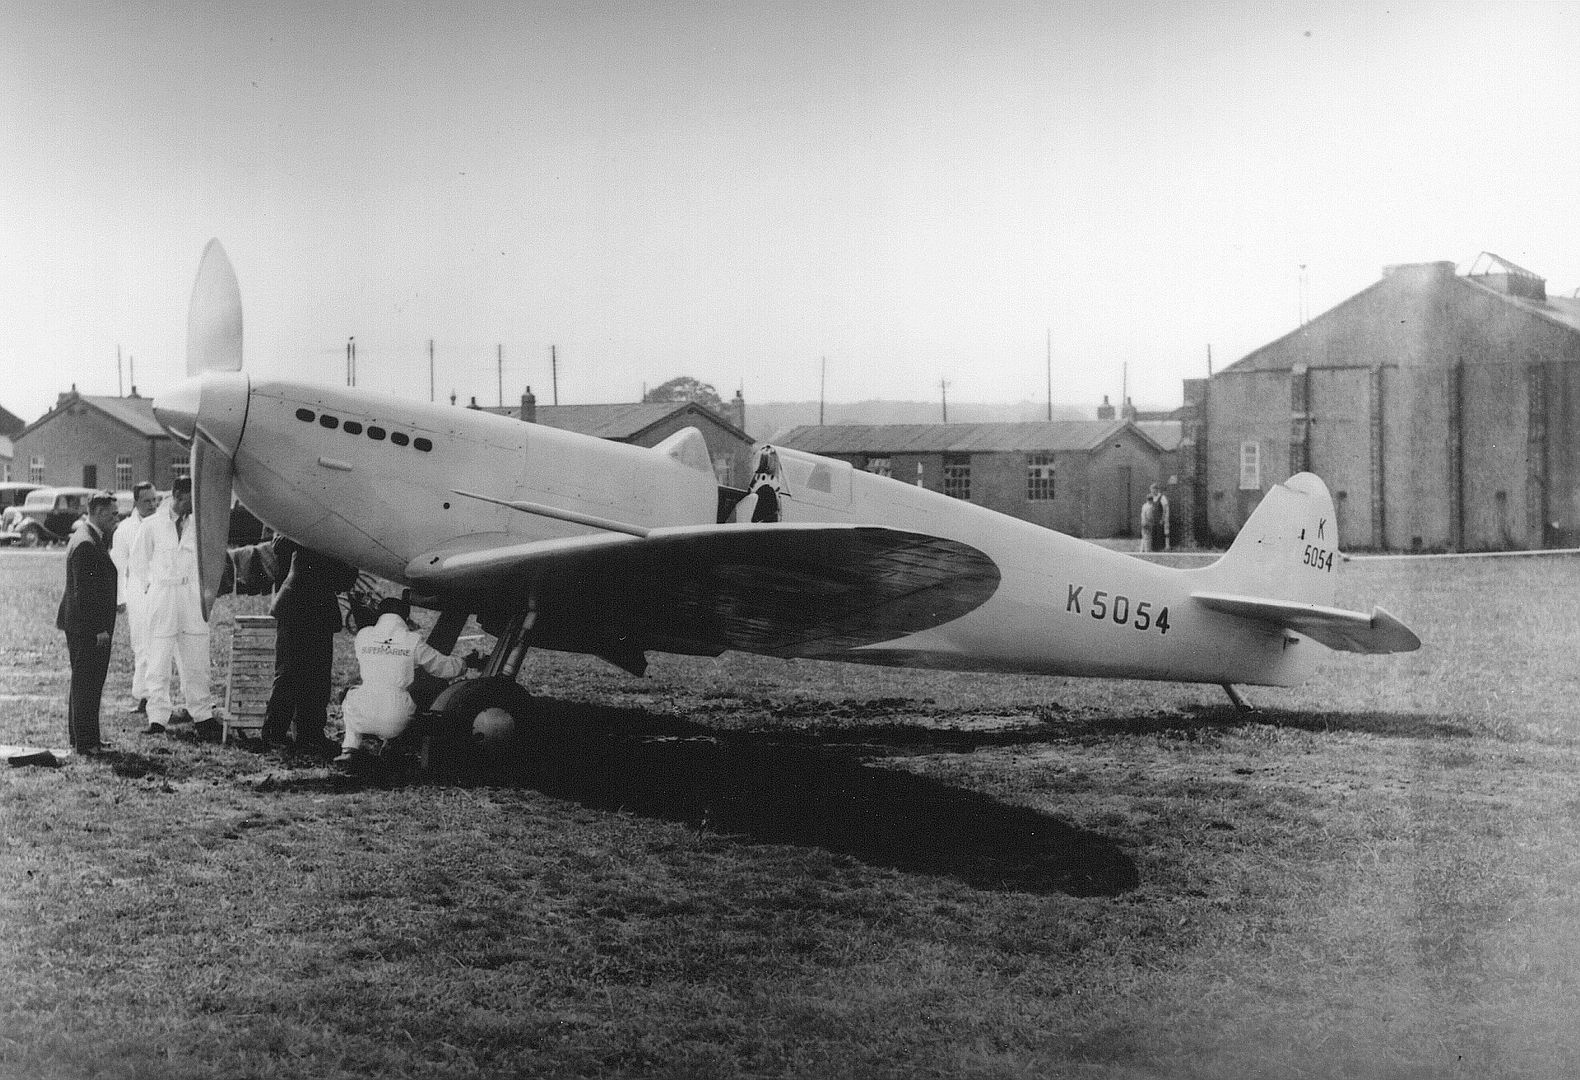 Spitfire Prototype K5054 8R5mFJW1ojoMaqinp7Sx6F